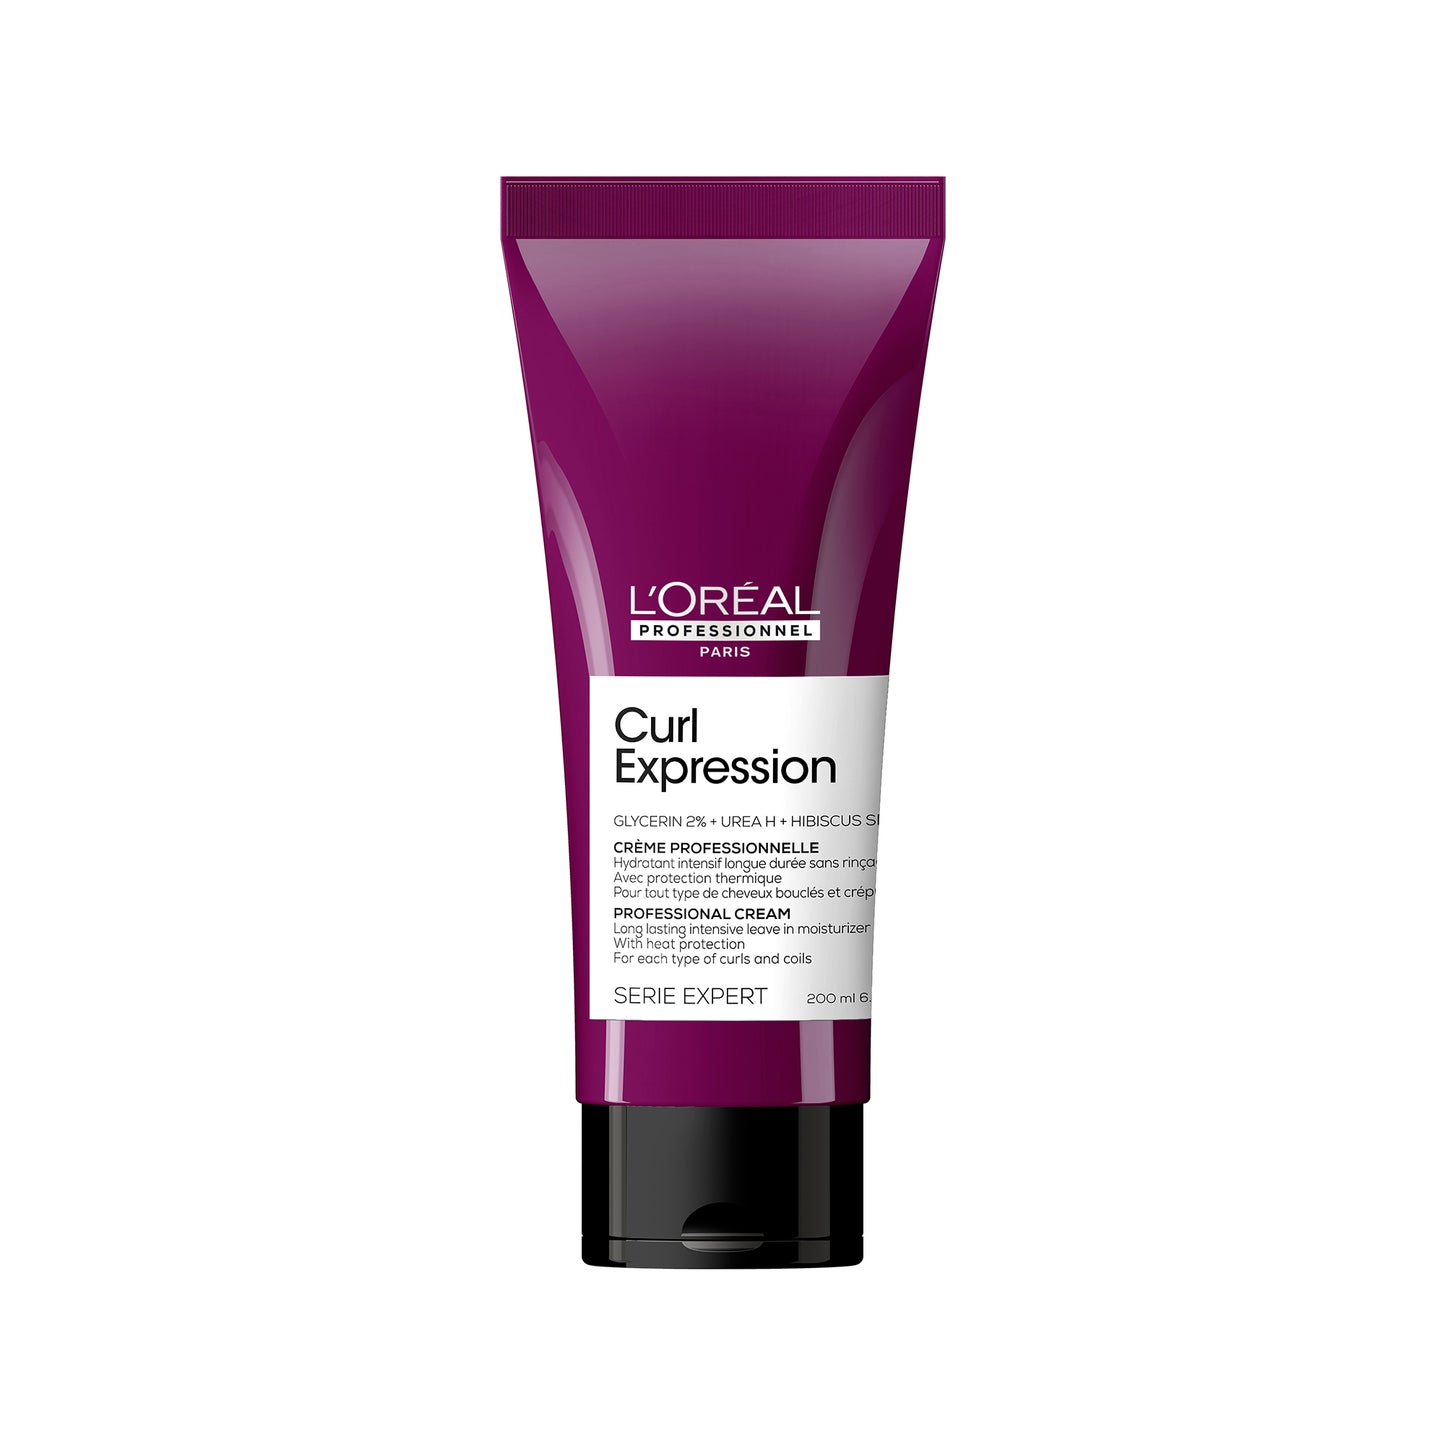 LP Curl Expression leave-in moisturizing cream 200ml